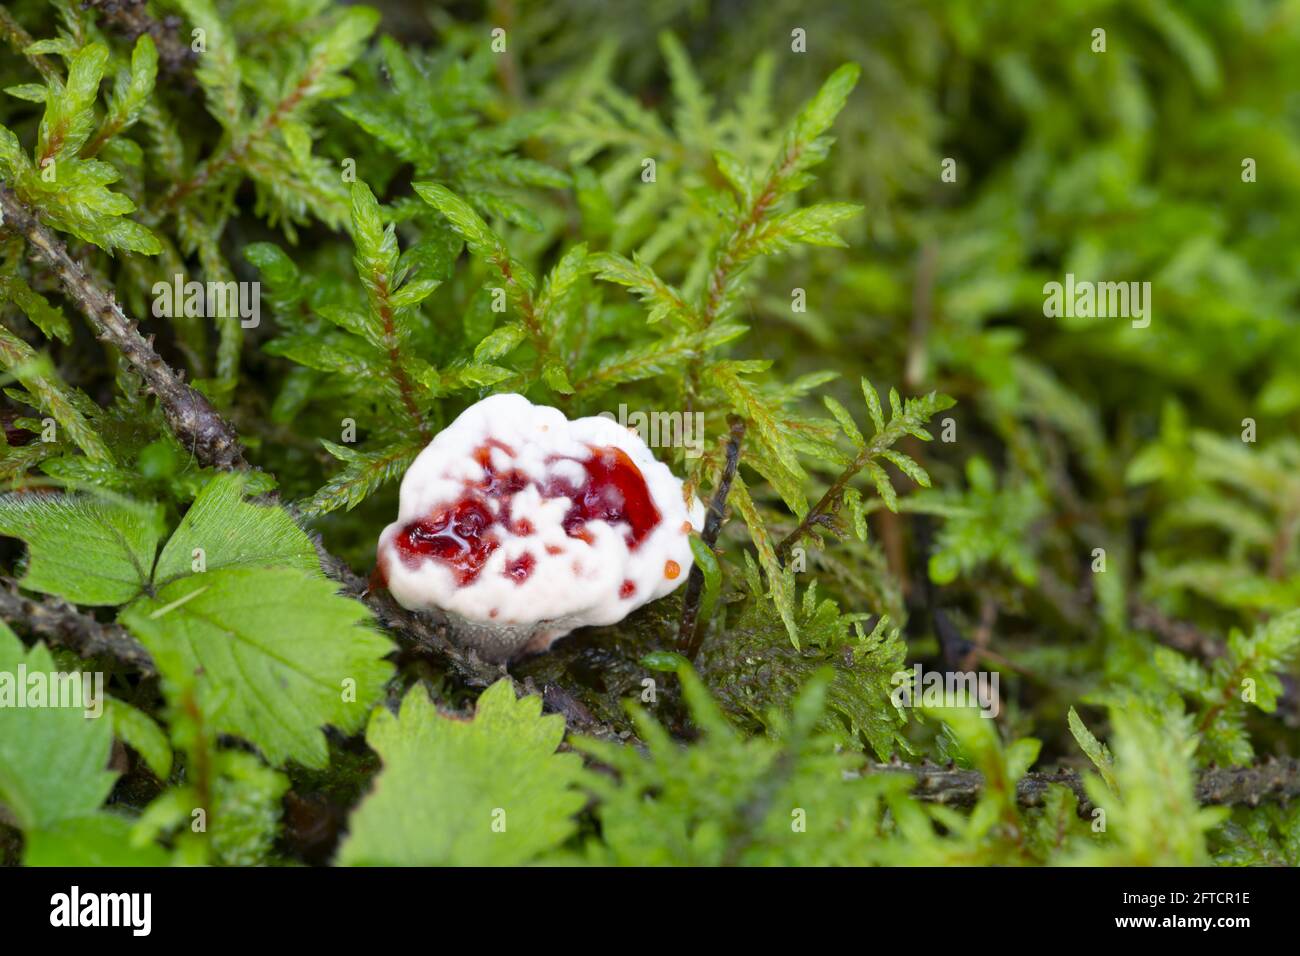 Bleeding tooth fungus, Hydnellum peckii growing among moss Stock Photo